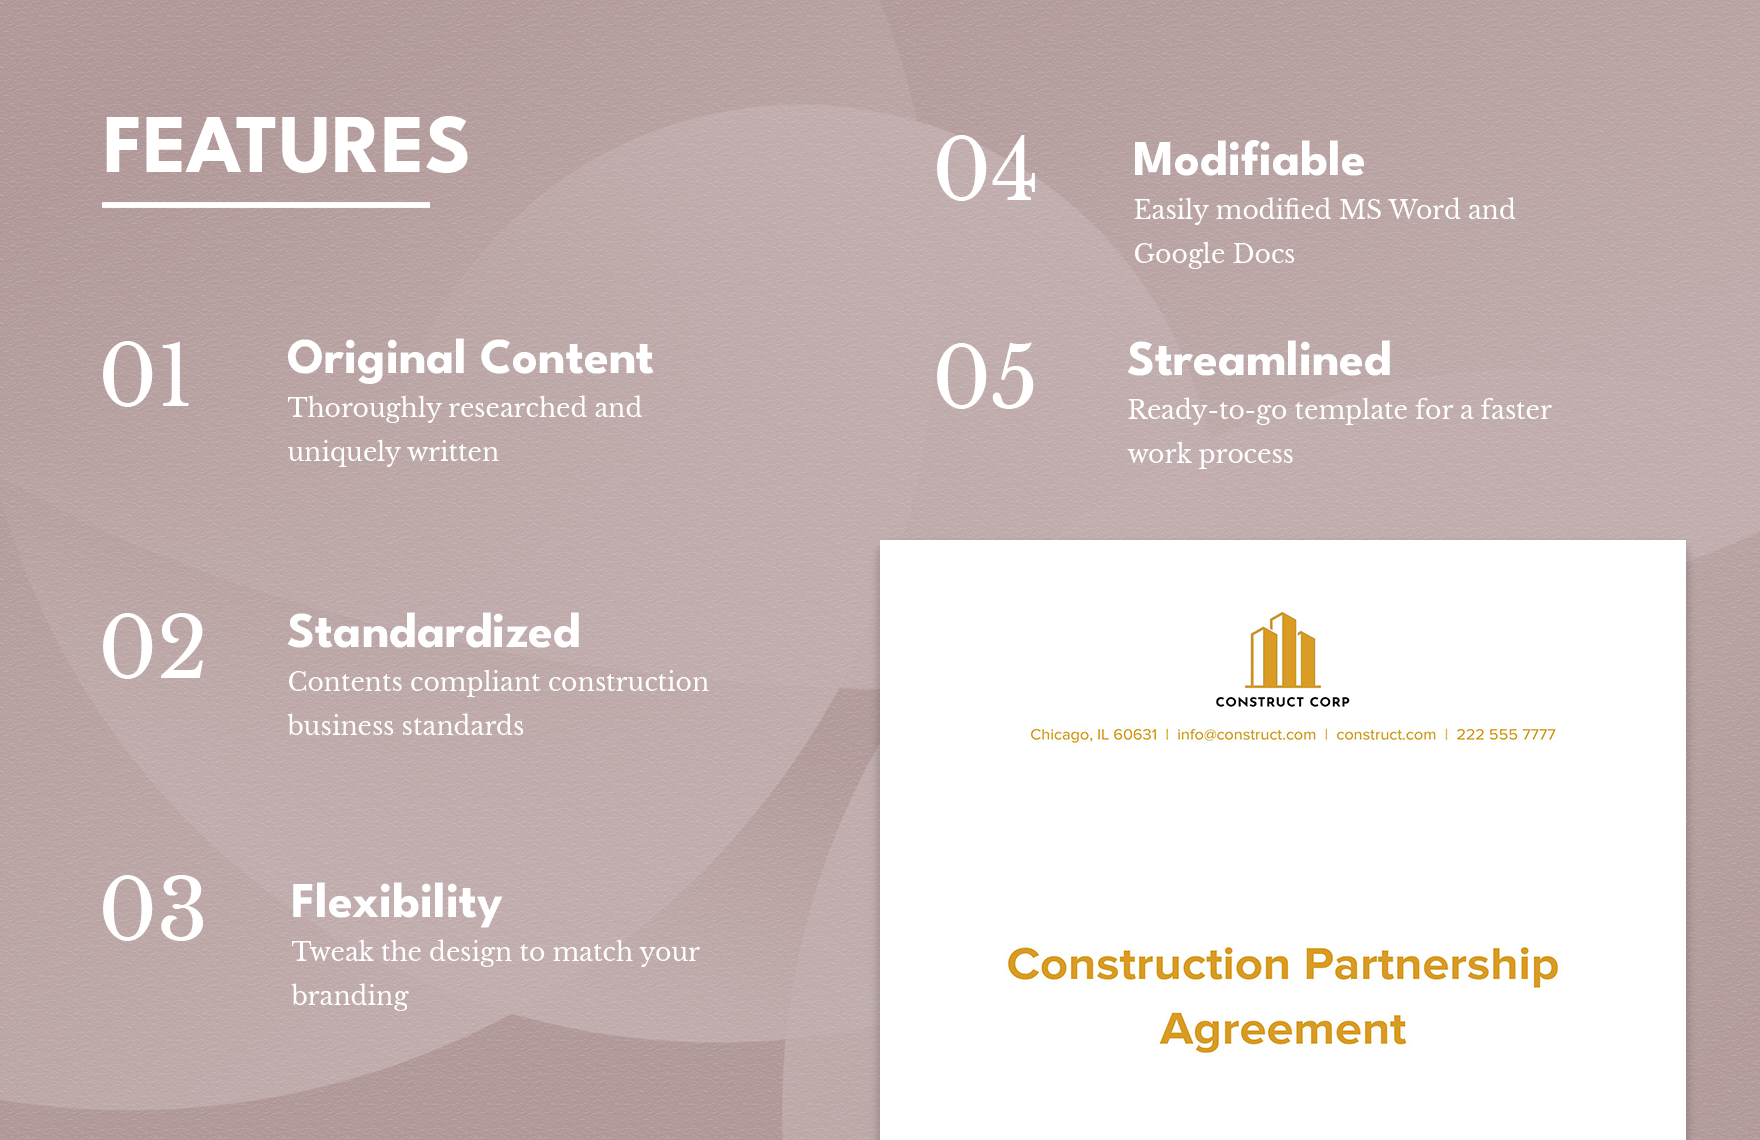 Construction Partnership Agreement